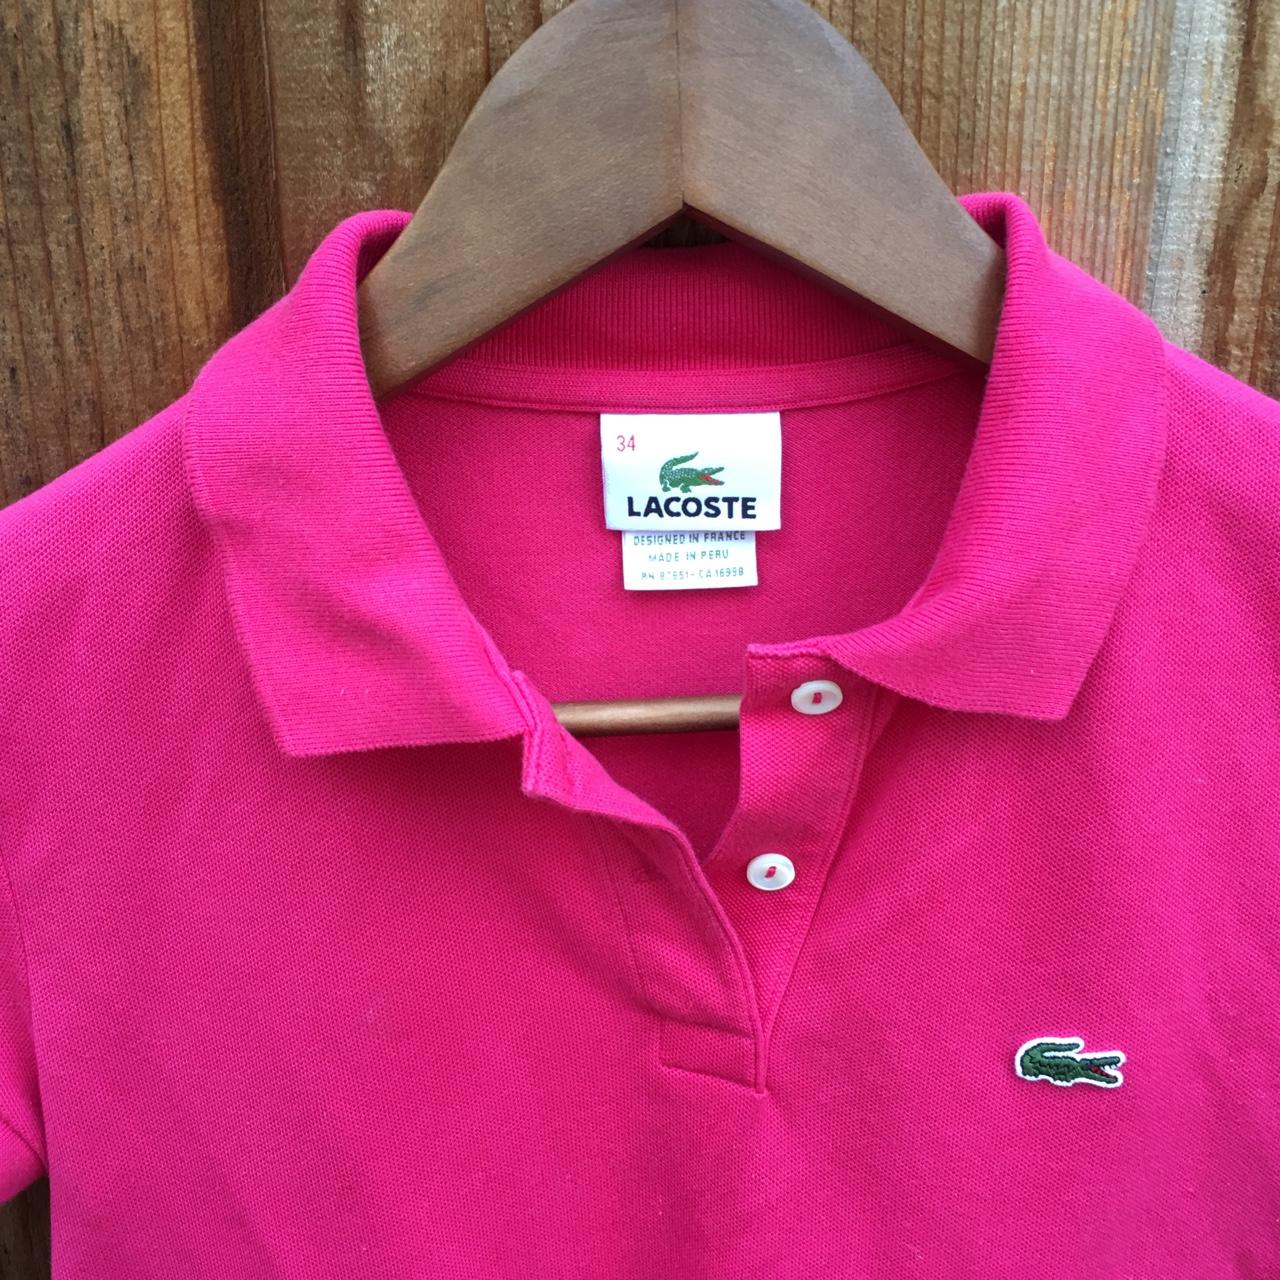 Lacoste pink/ fuchsia polo shirt. Great... -